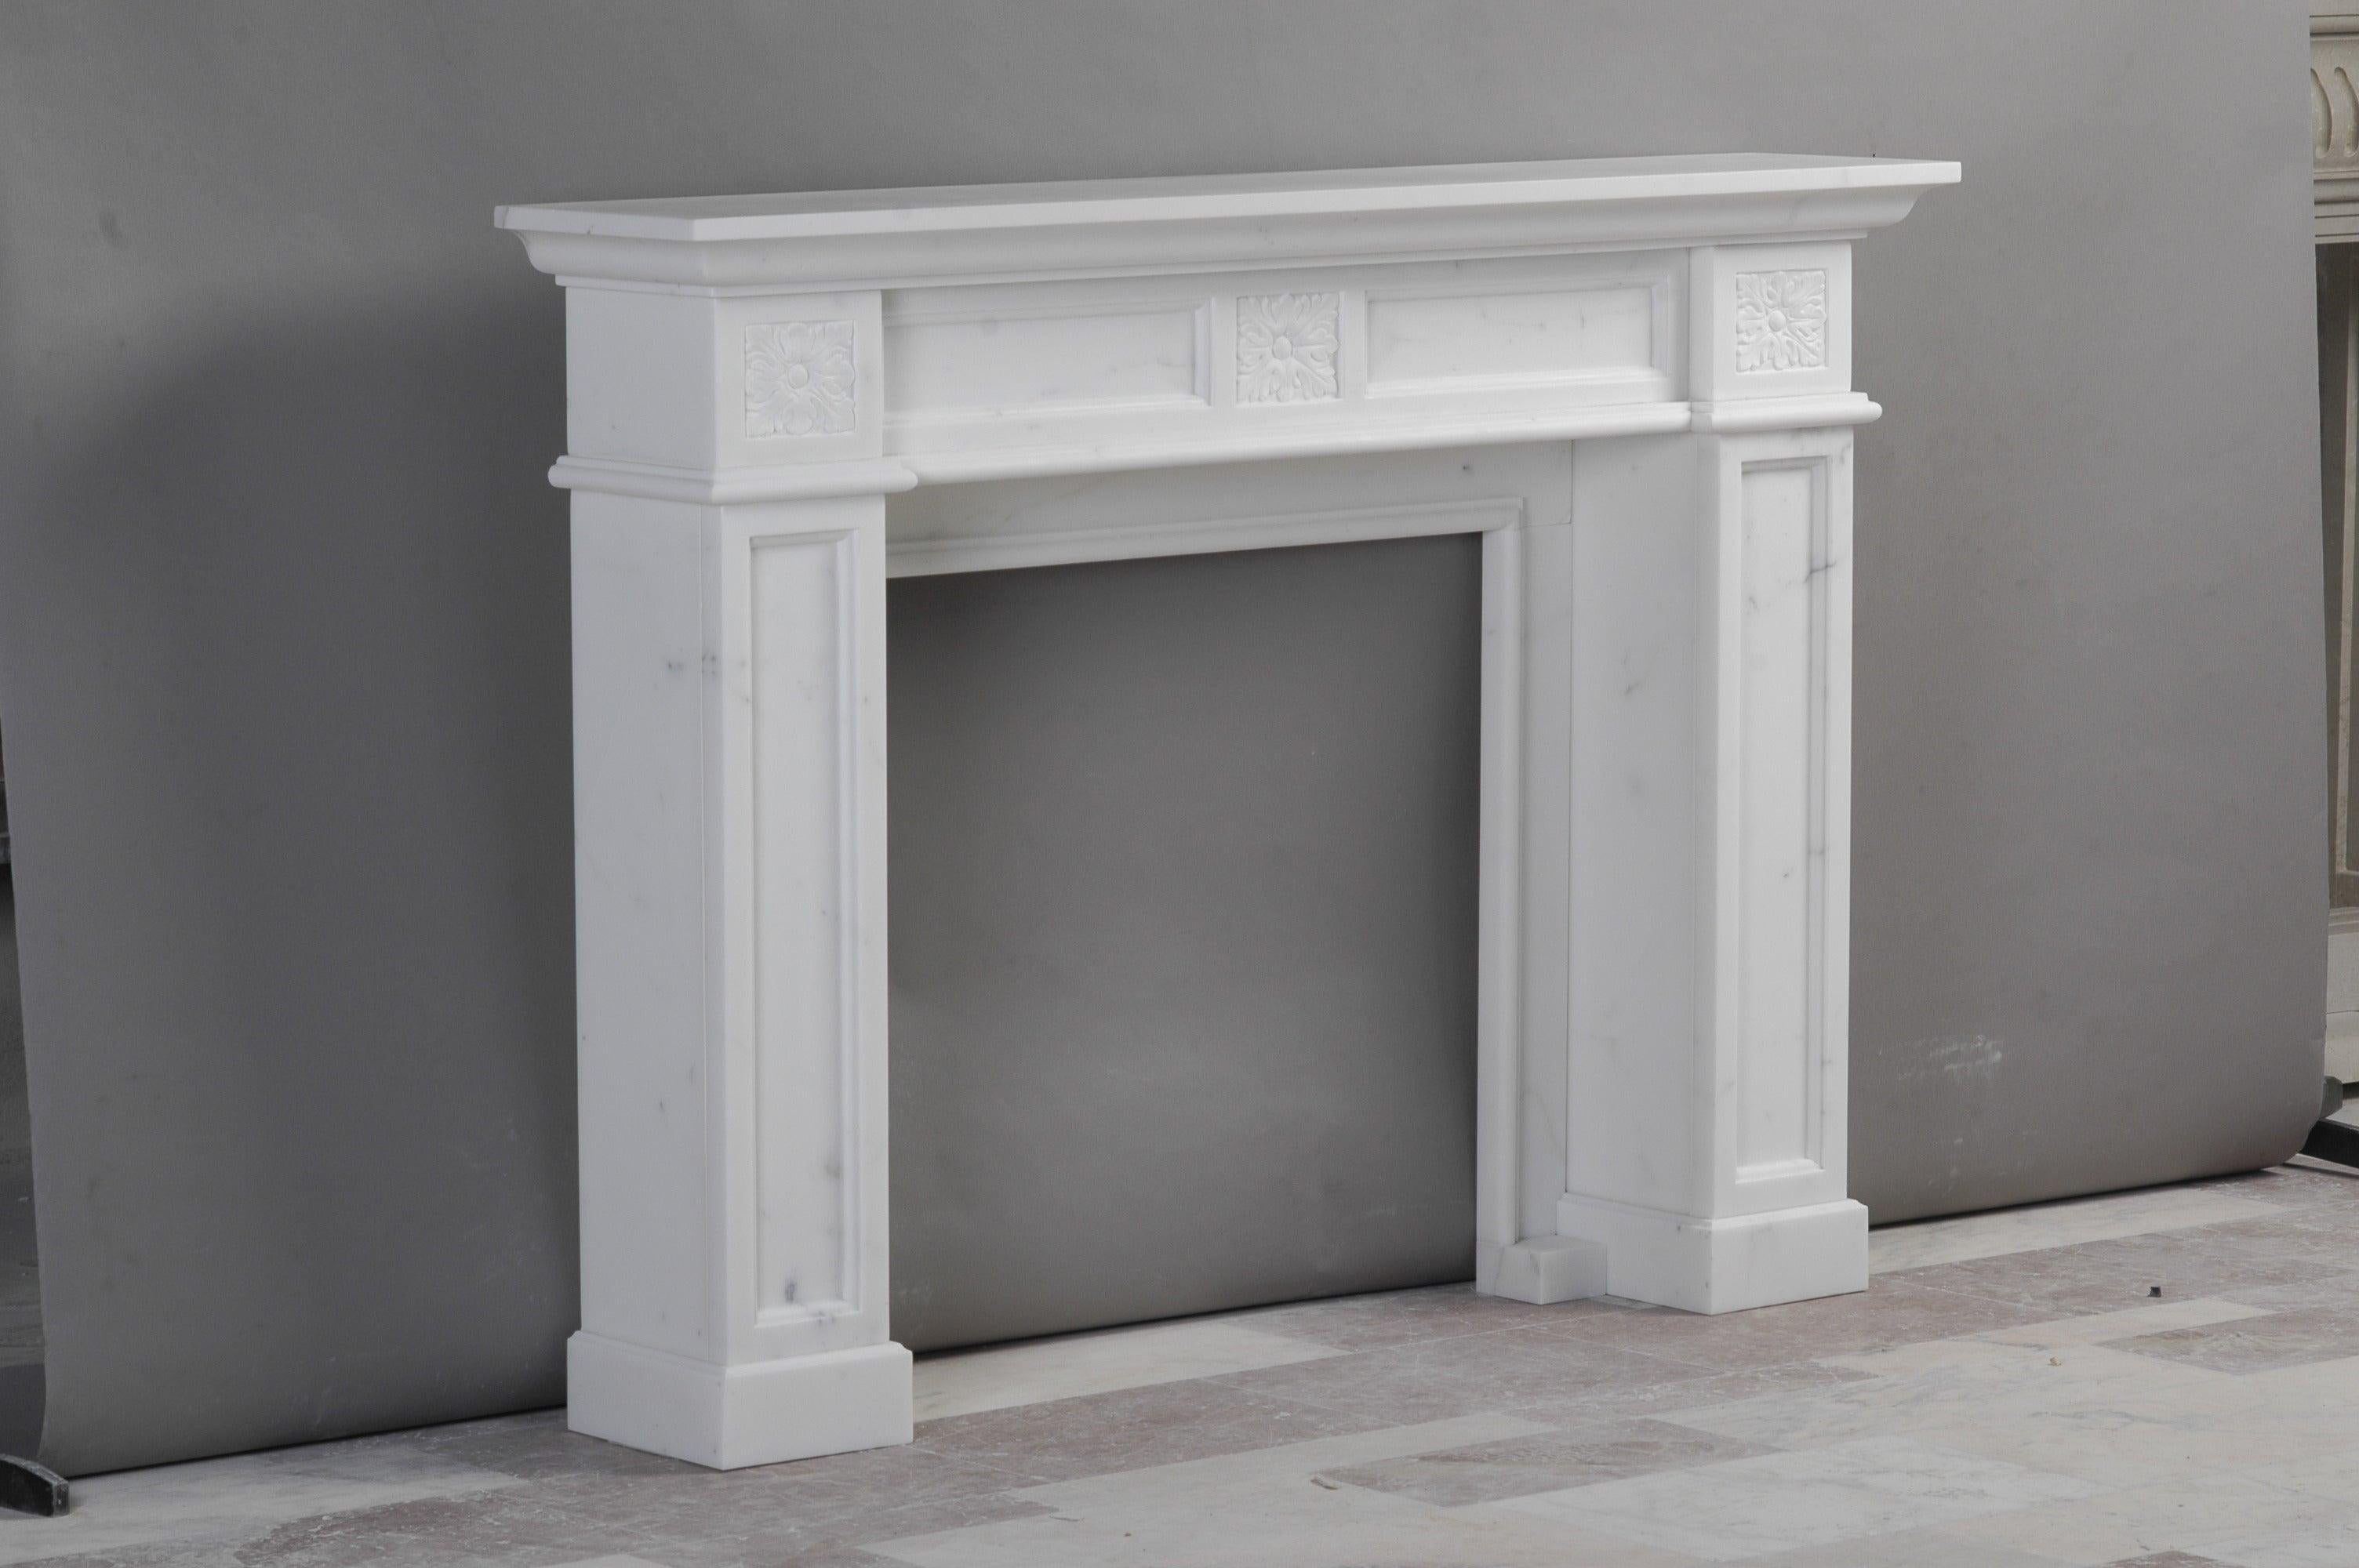 Modern London Fireplace in Bianca Carrara Marble For Sale